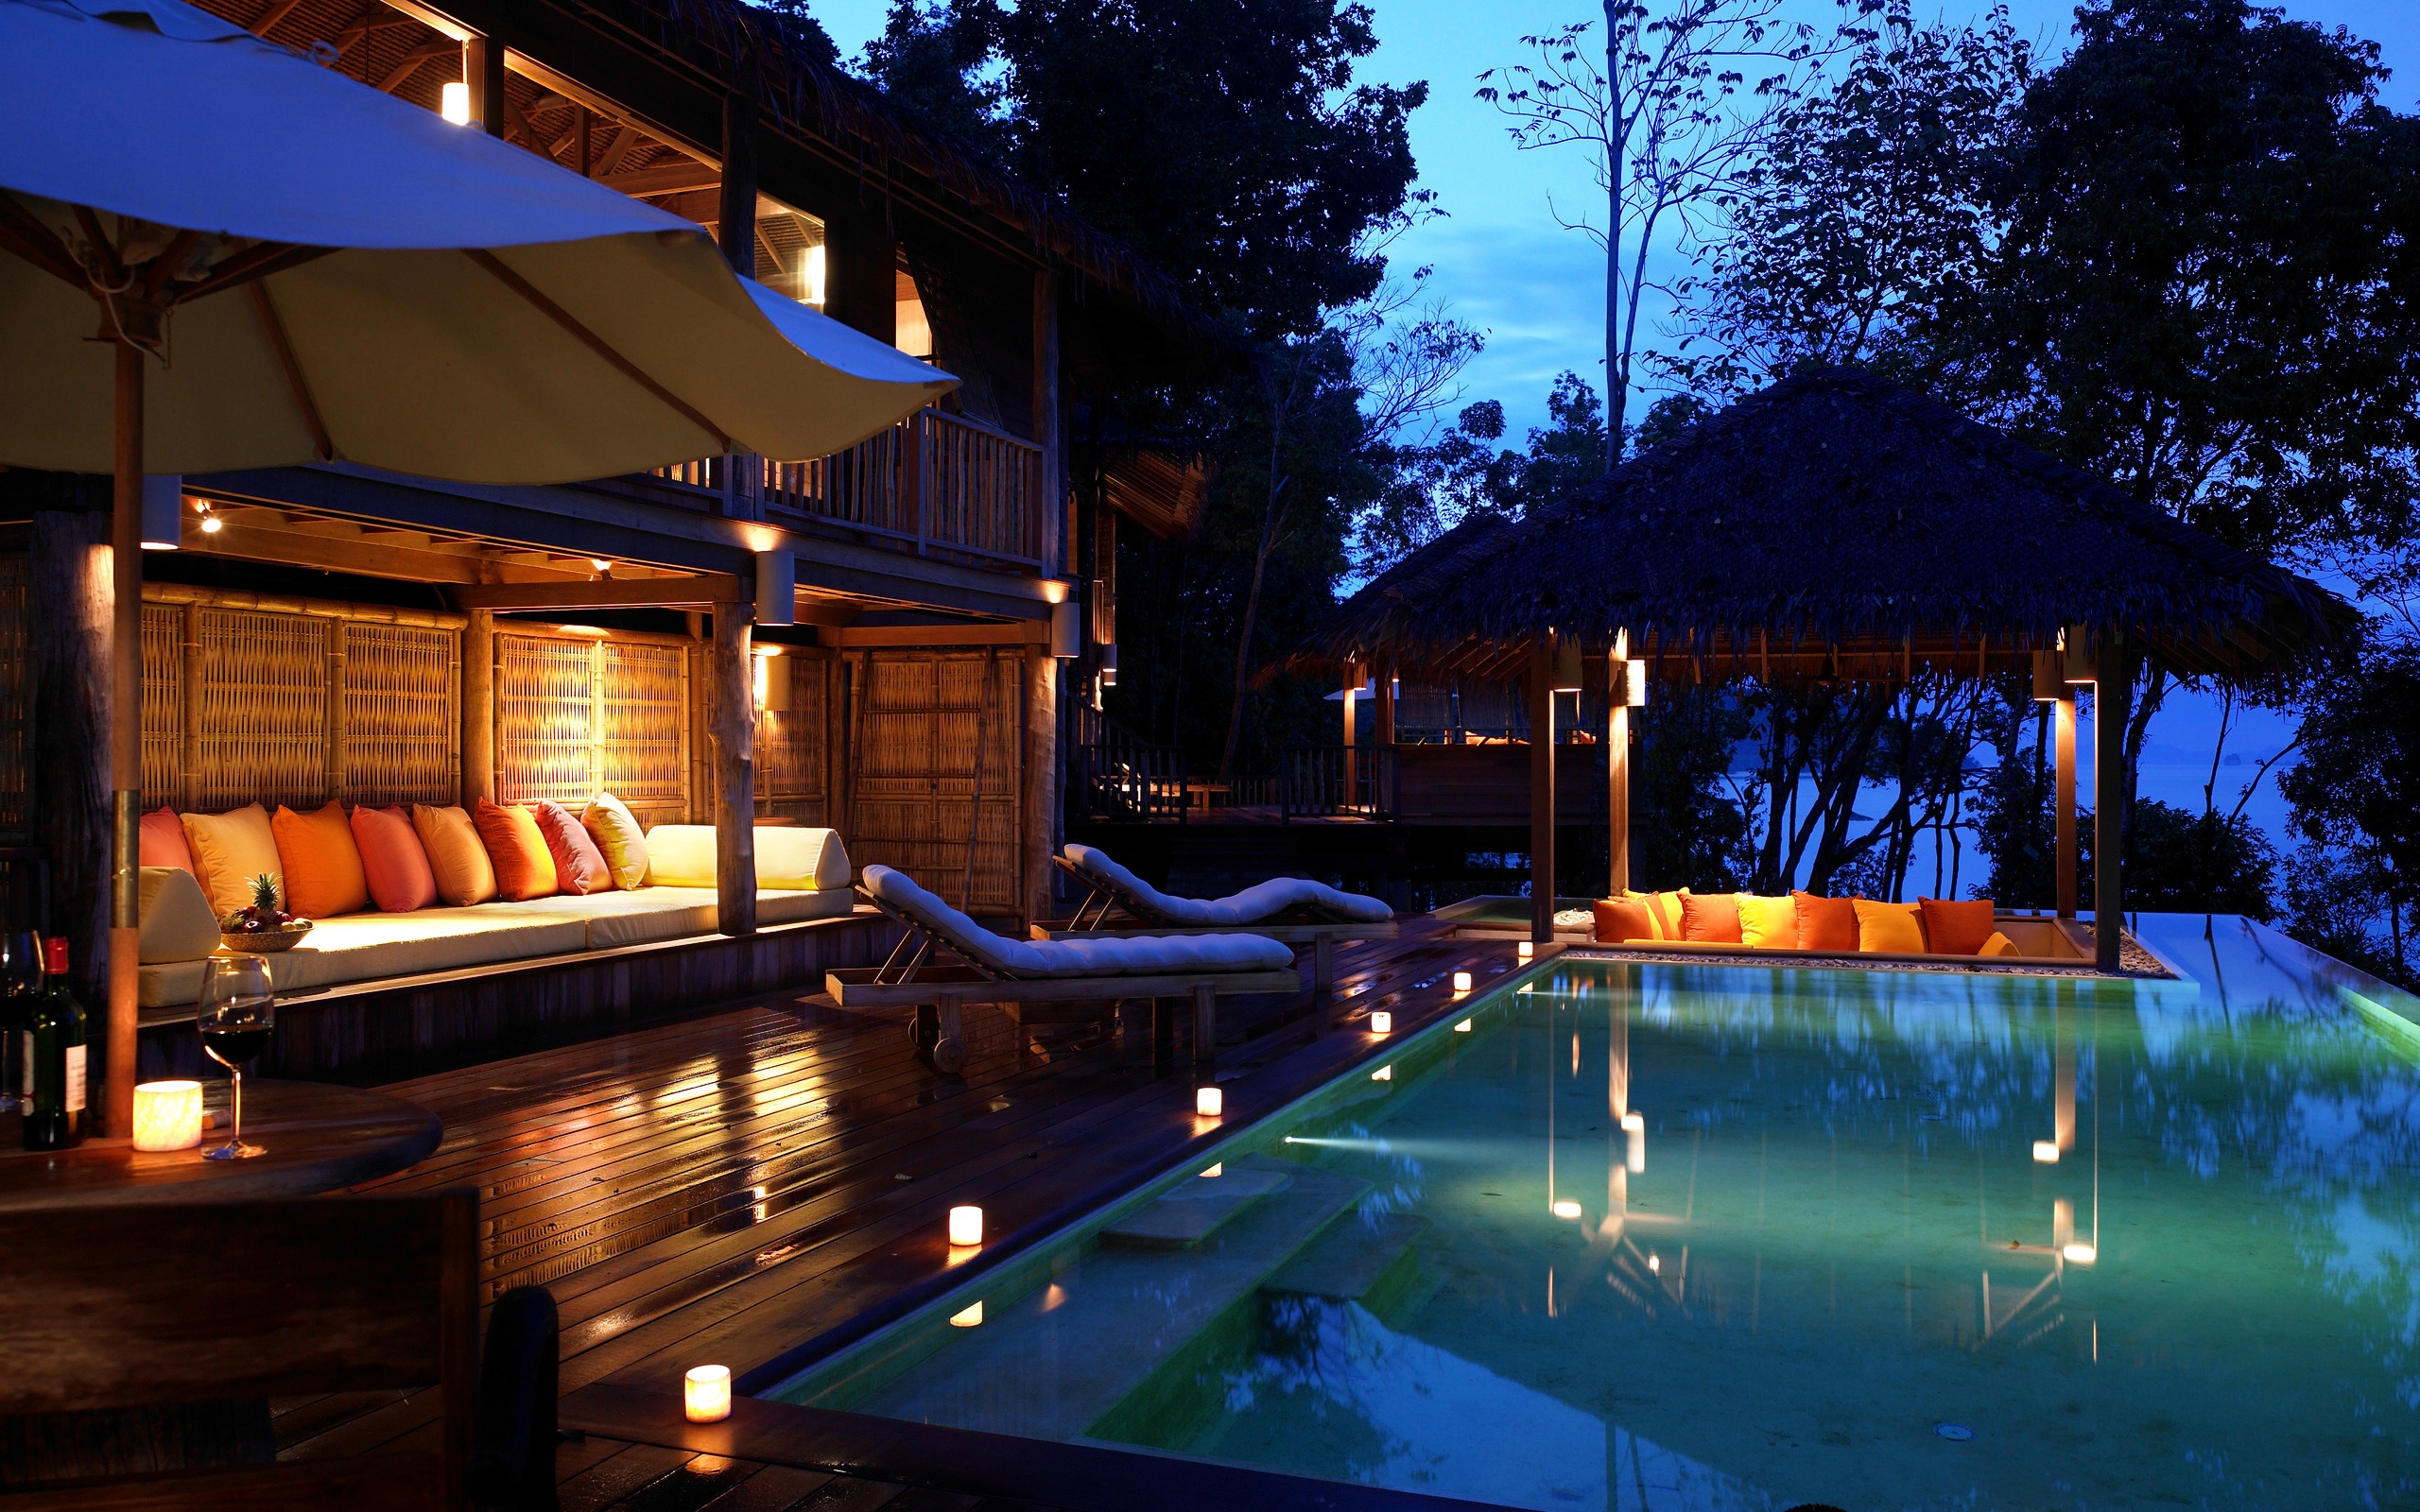 Luxury Sea Resort for 2560 x 1600 widescreen resolution